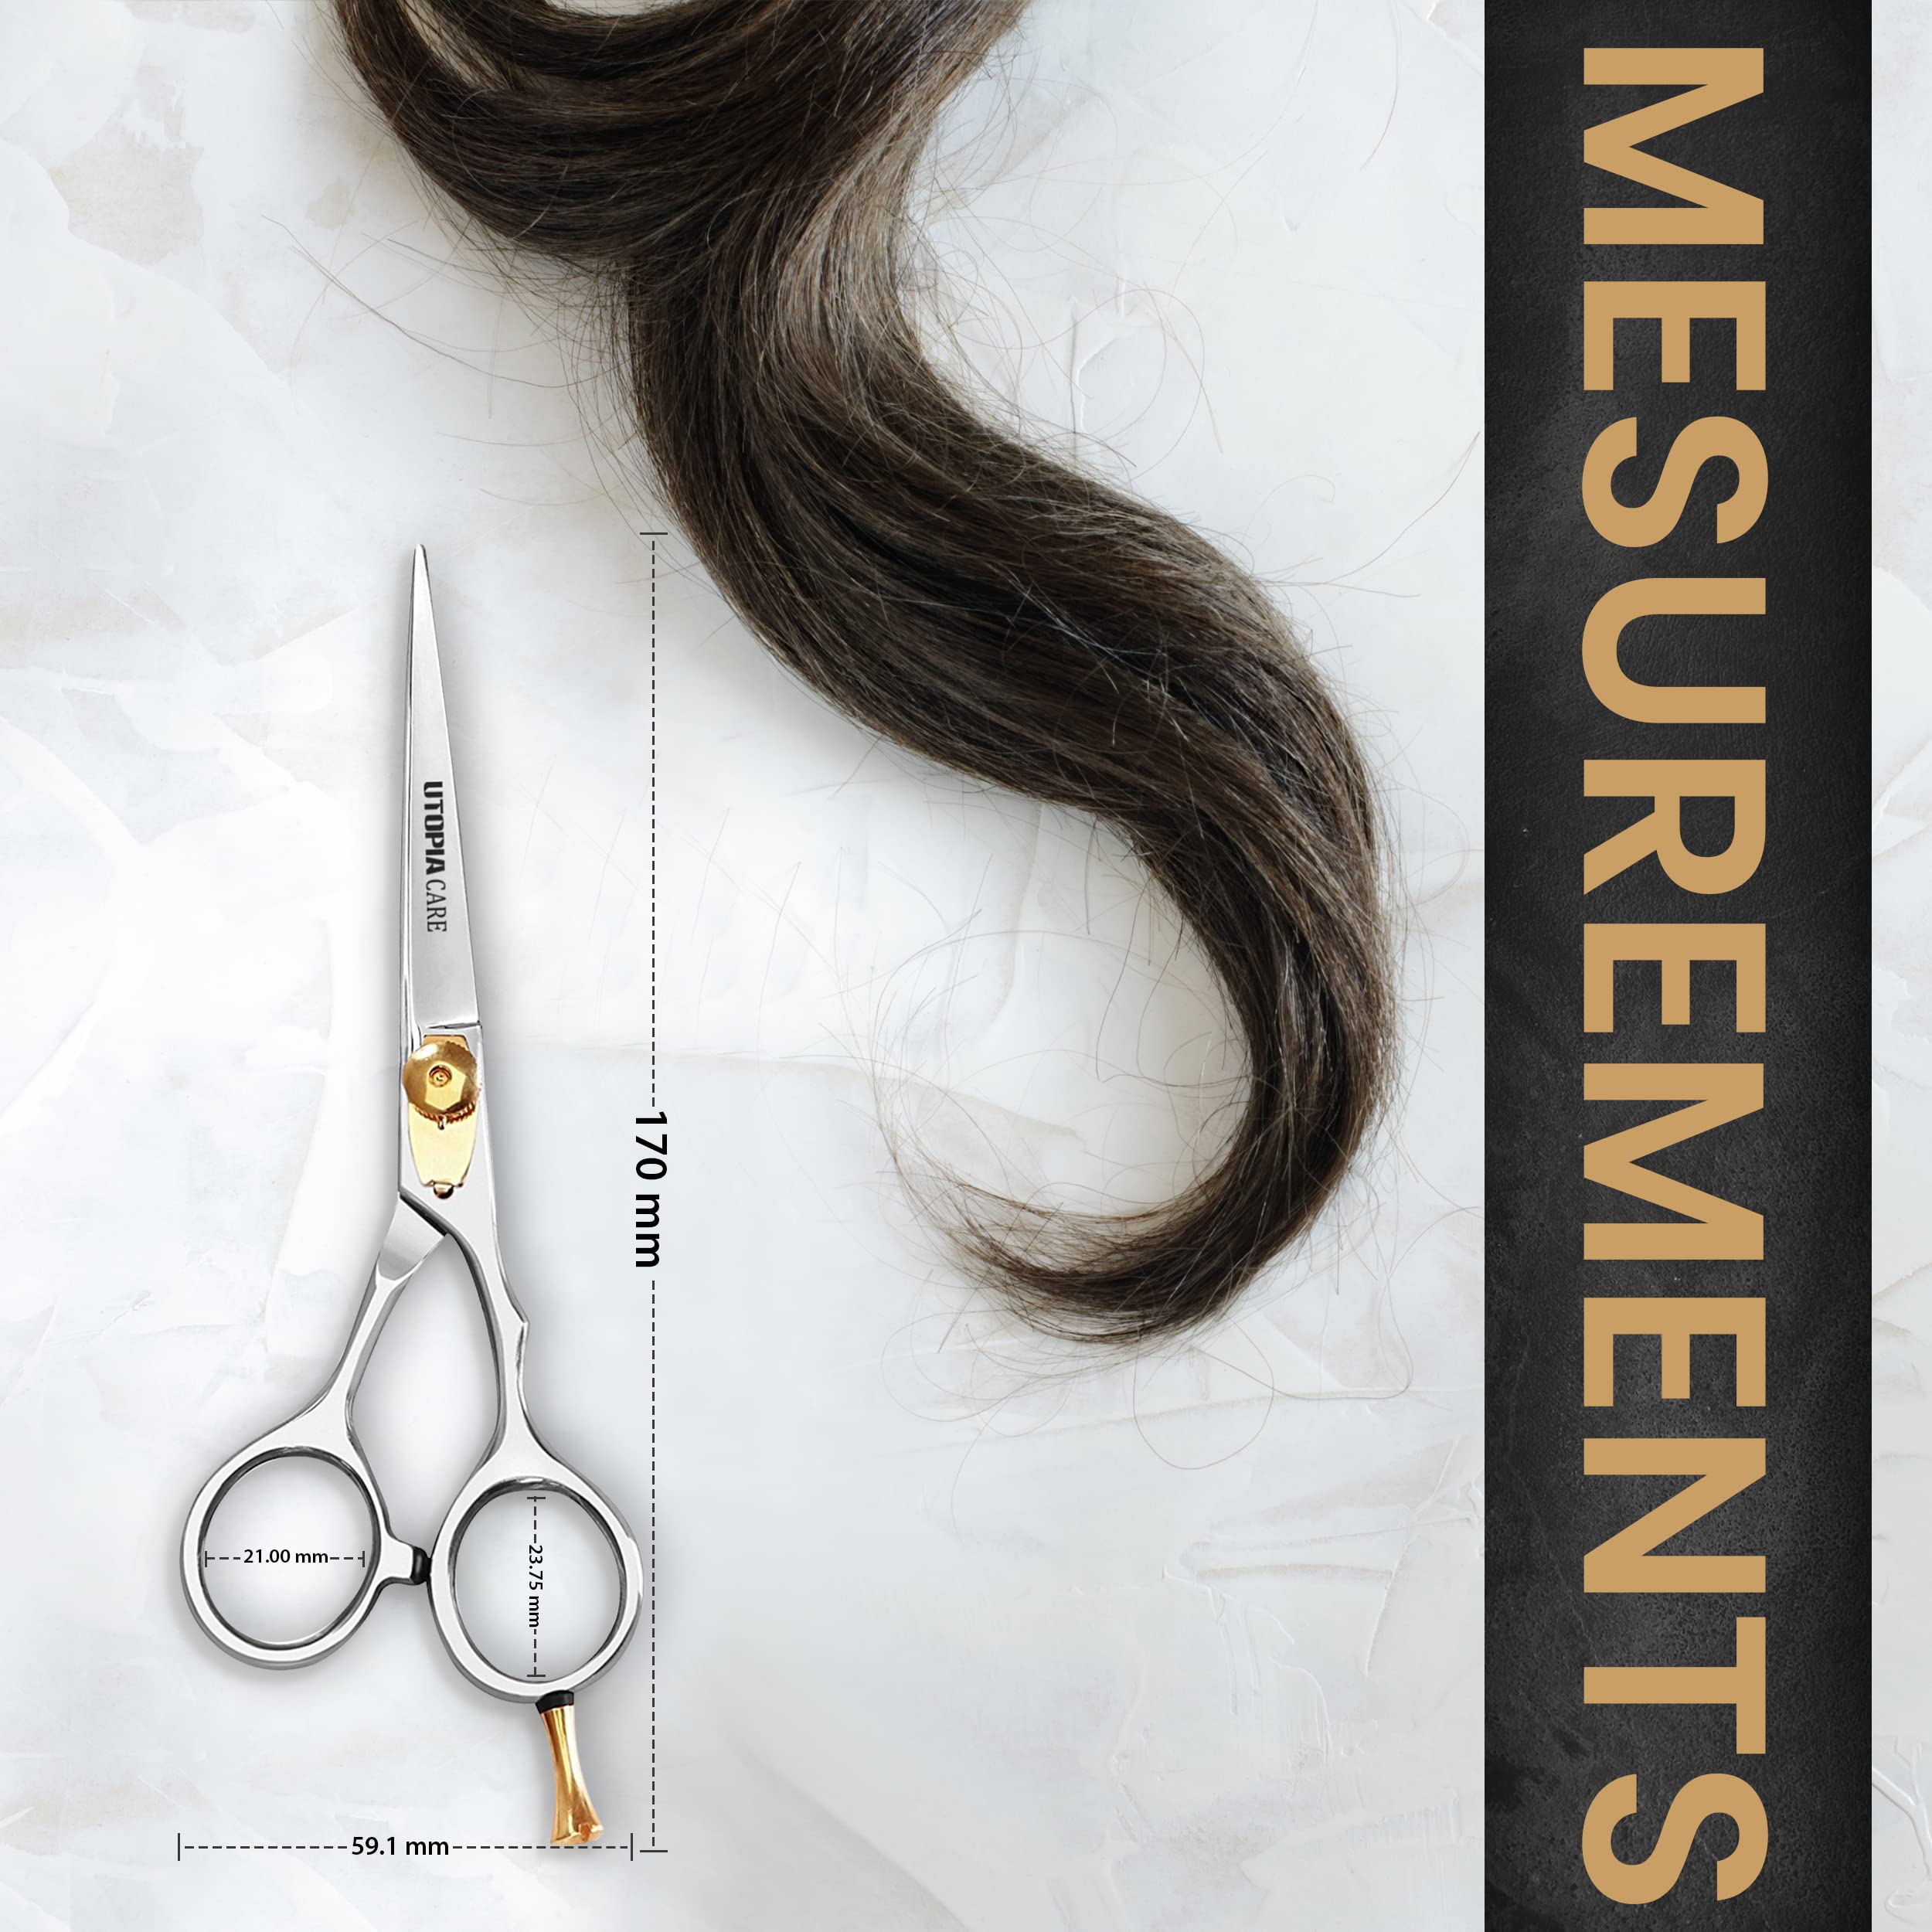 Utopia Care Hairdressing Scissors Hair Scissors 6.5 Inch | Premium Stainless Steel Razor Hair Cutting Scissor with Adjustable Tension Screw and Detachable Finger Rest for Men, Women, Barber (Silver)